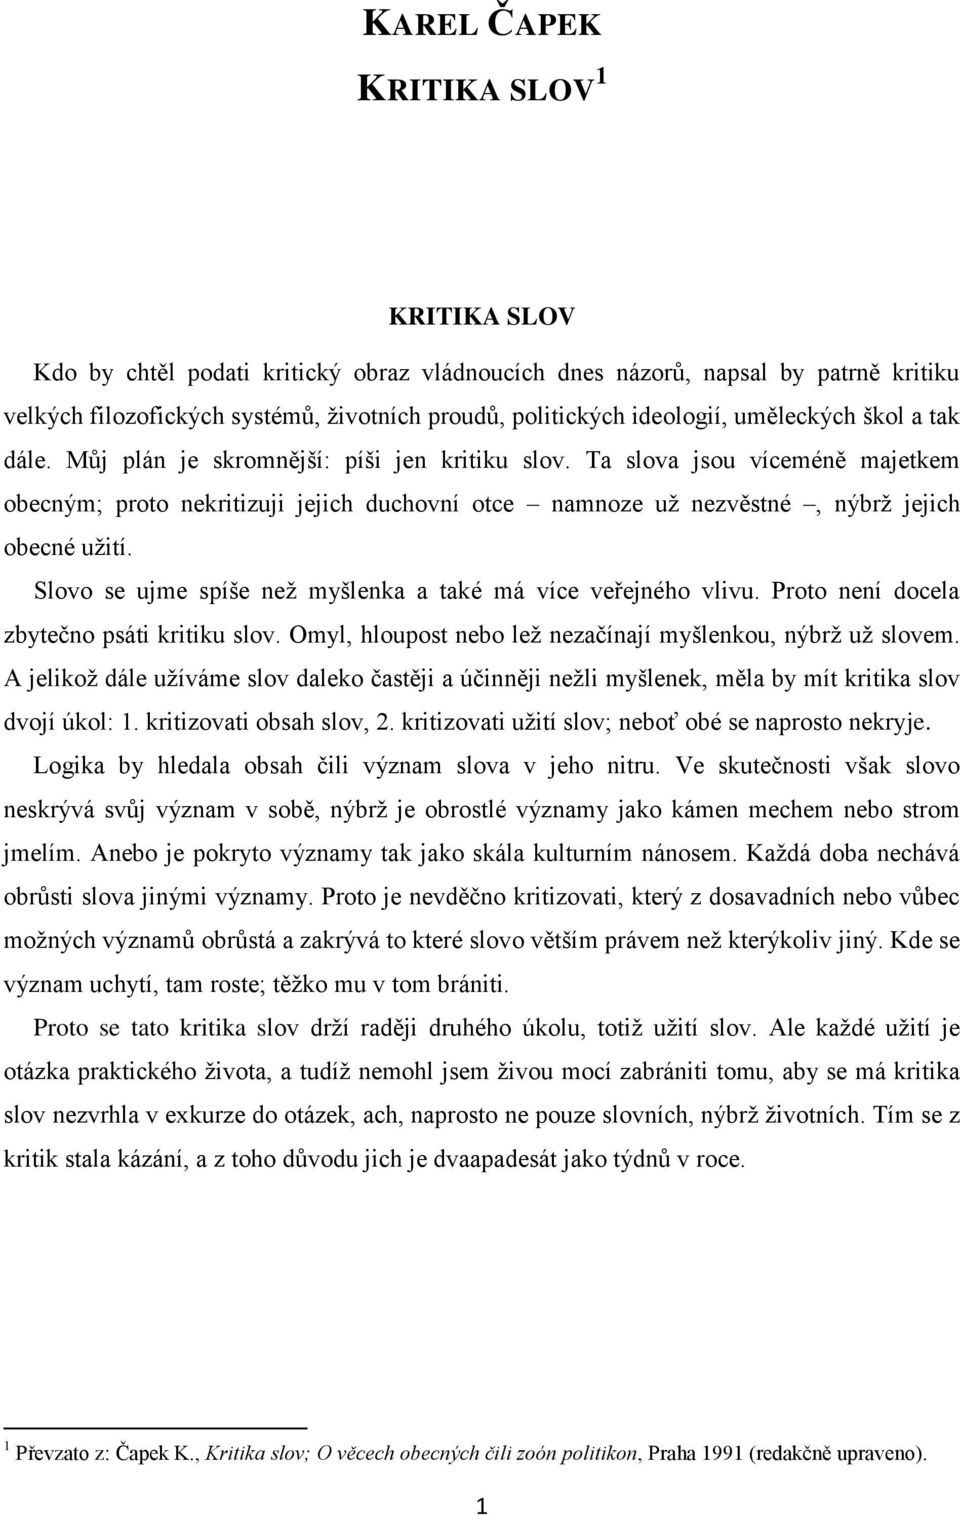 KAREL ČAPEK KRITIKA SLOV 1 - PDF Stažení zdarma